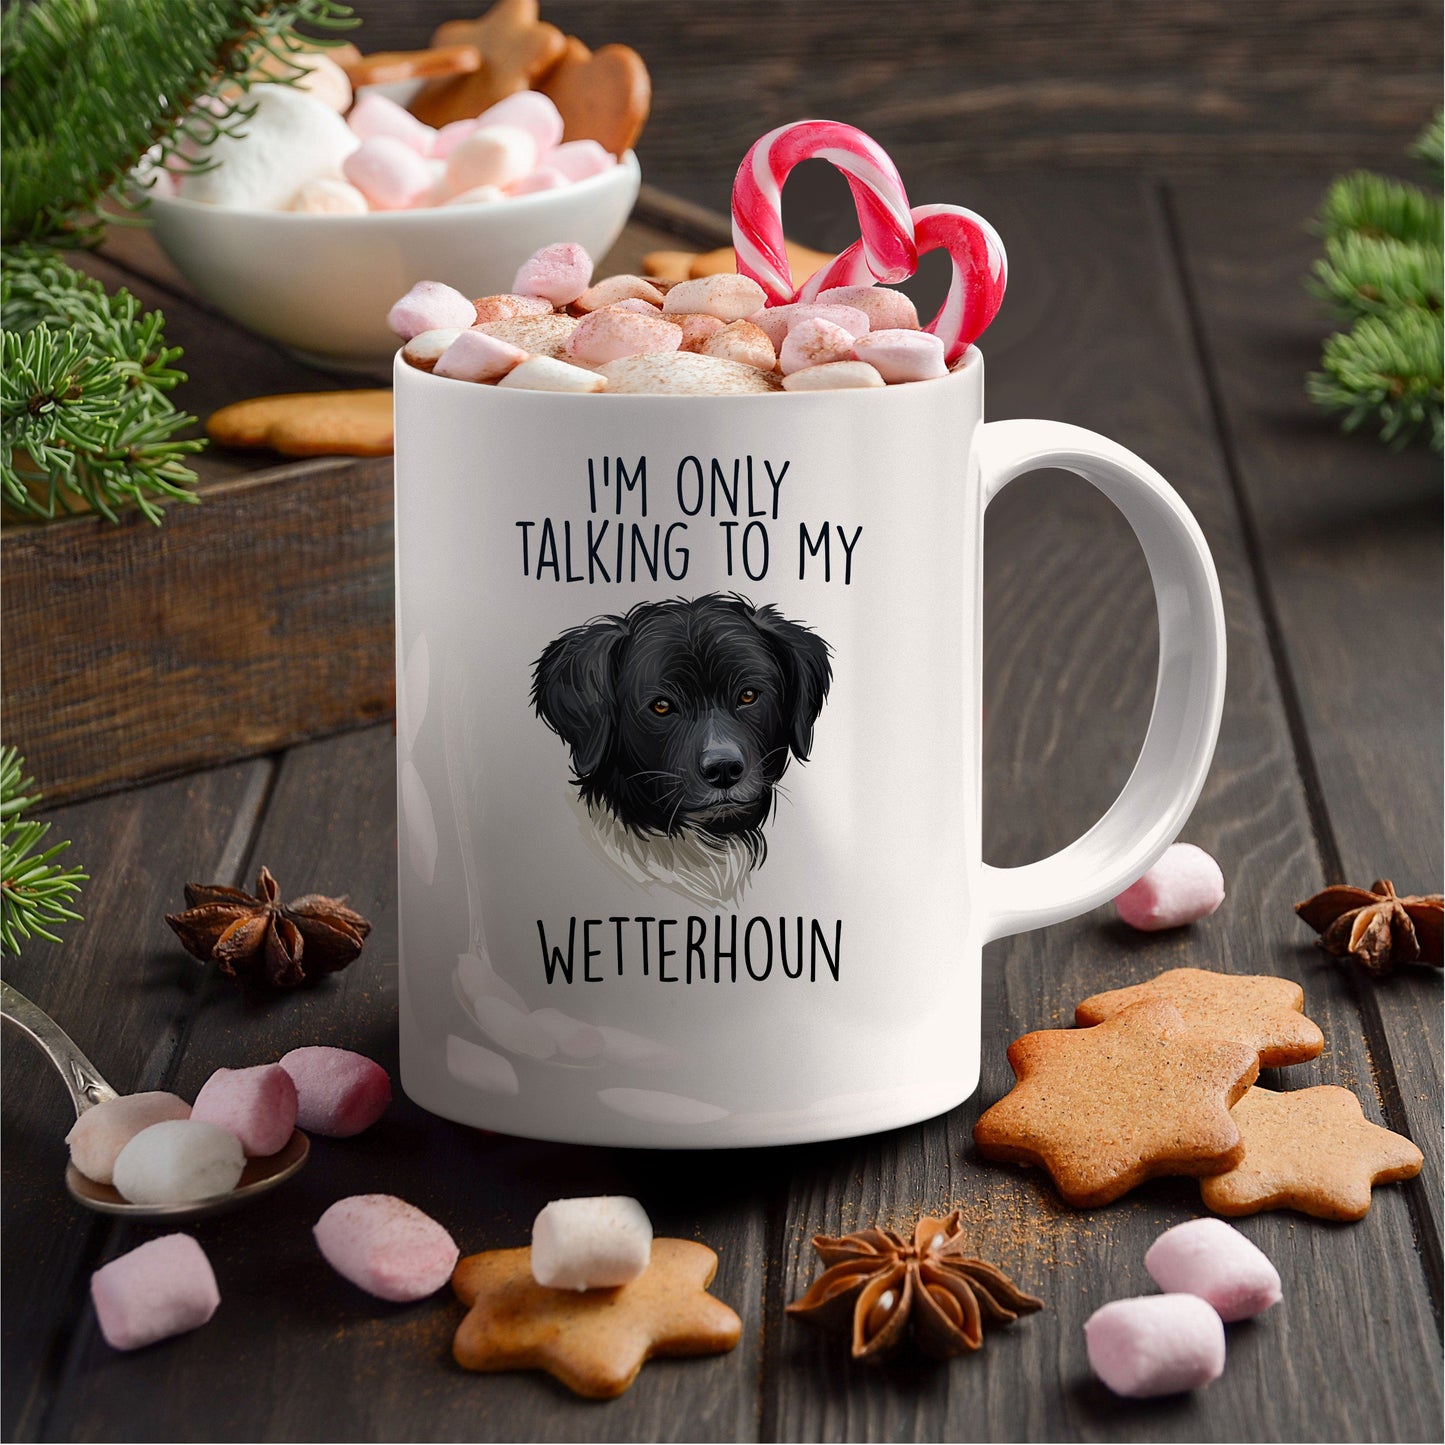 Wetterhoun Dog Custom Ceramic Coffee Mug I'm only Talking to my Wetterhoun Dog